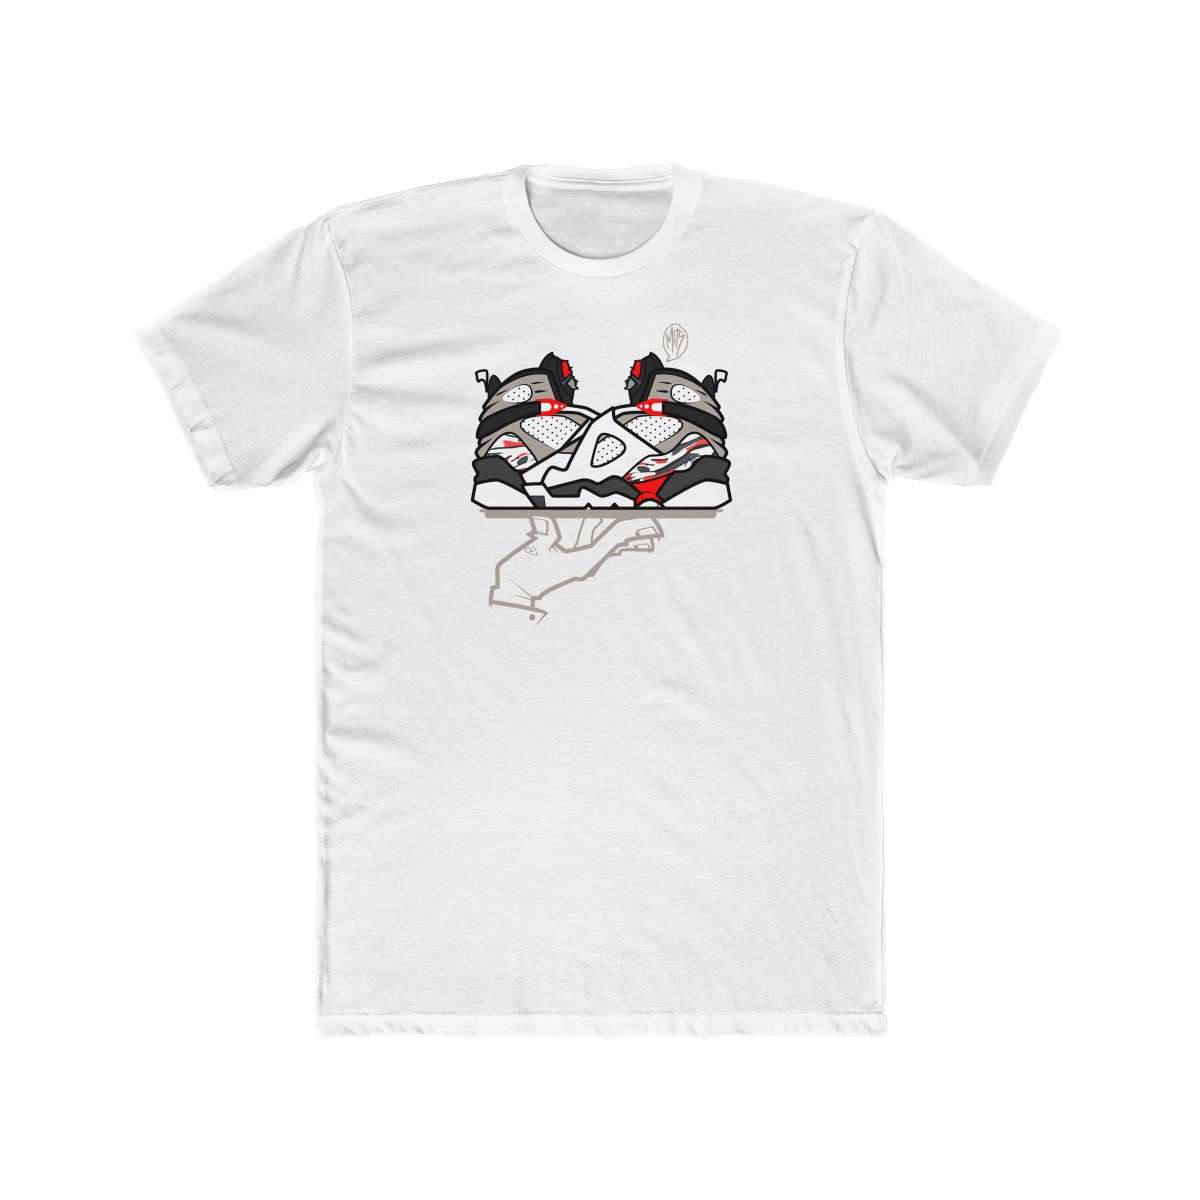 Signature ‘Now Serving A Mas-T-Piece’ Bugs Bunny 8 Hook-up T-Shirt